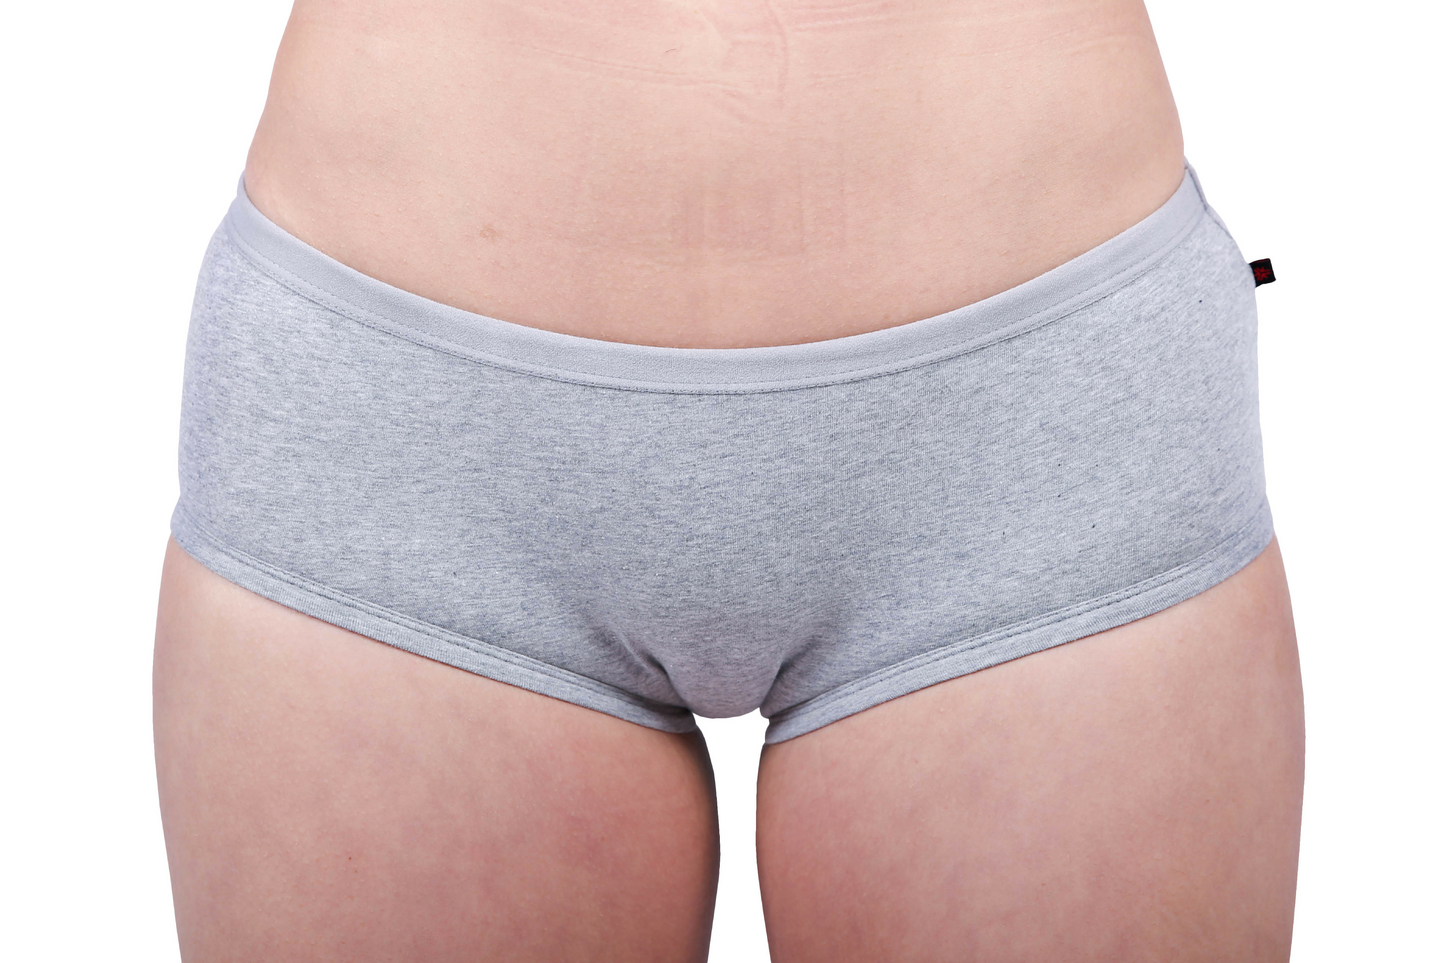 Ethical Women's Boyleg Underwear (2 Pack Pink and Grey)